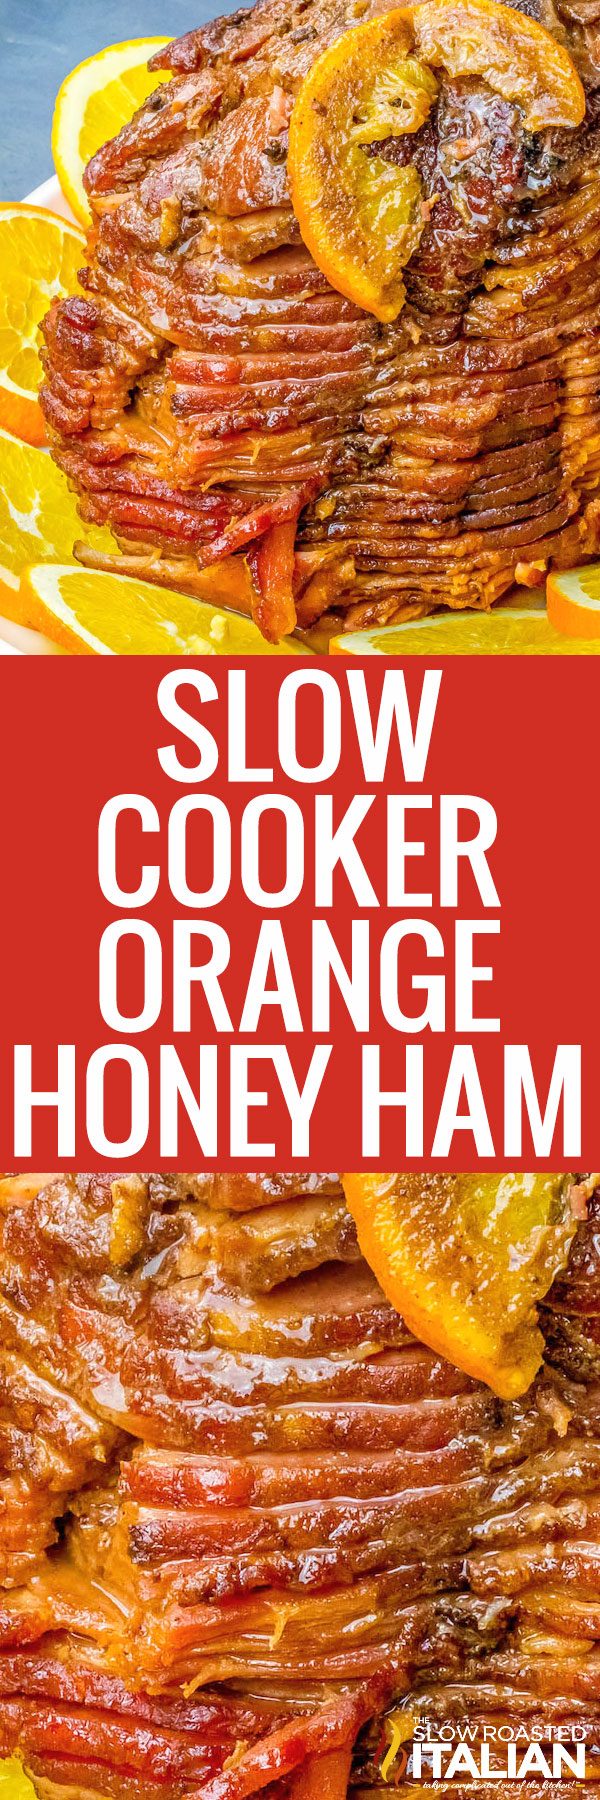 slow cooker orange honey ham -pin